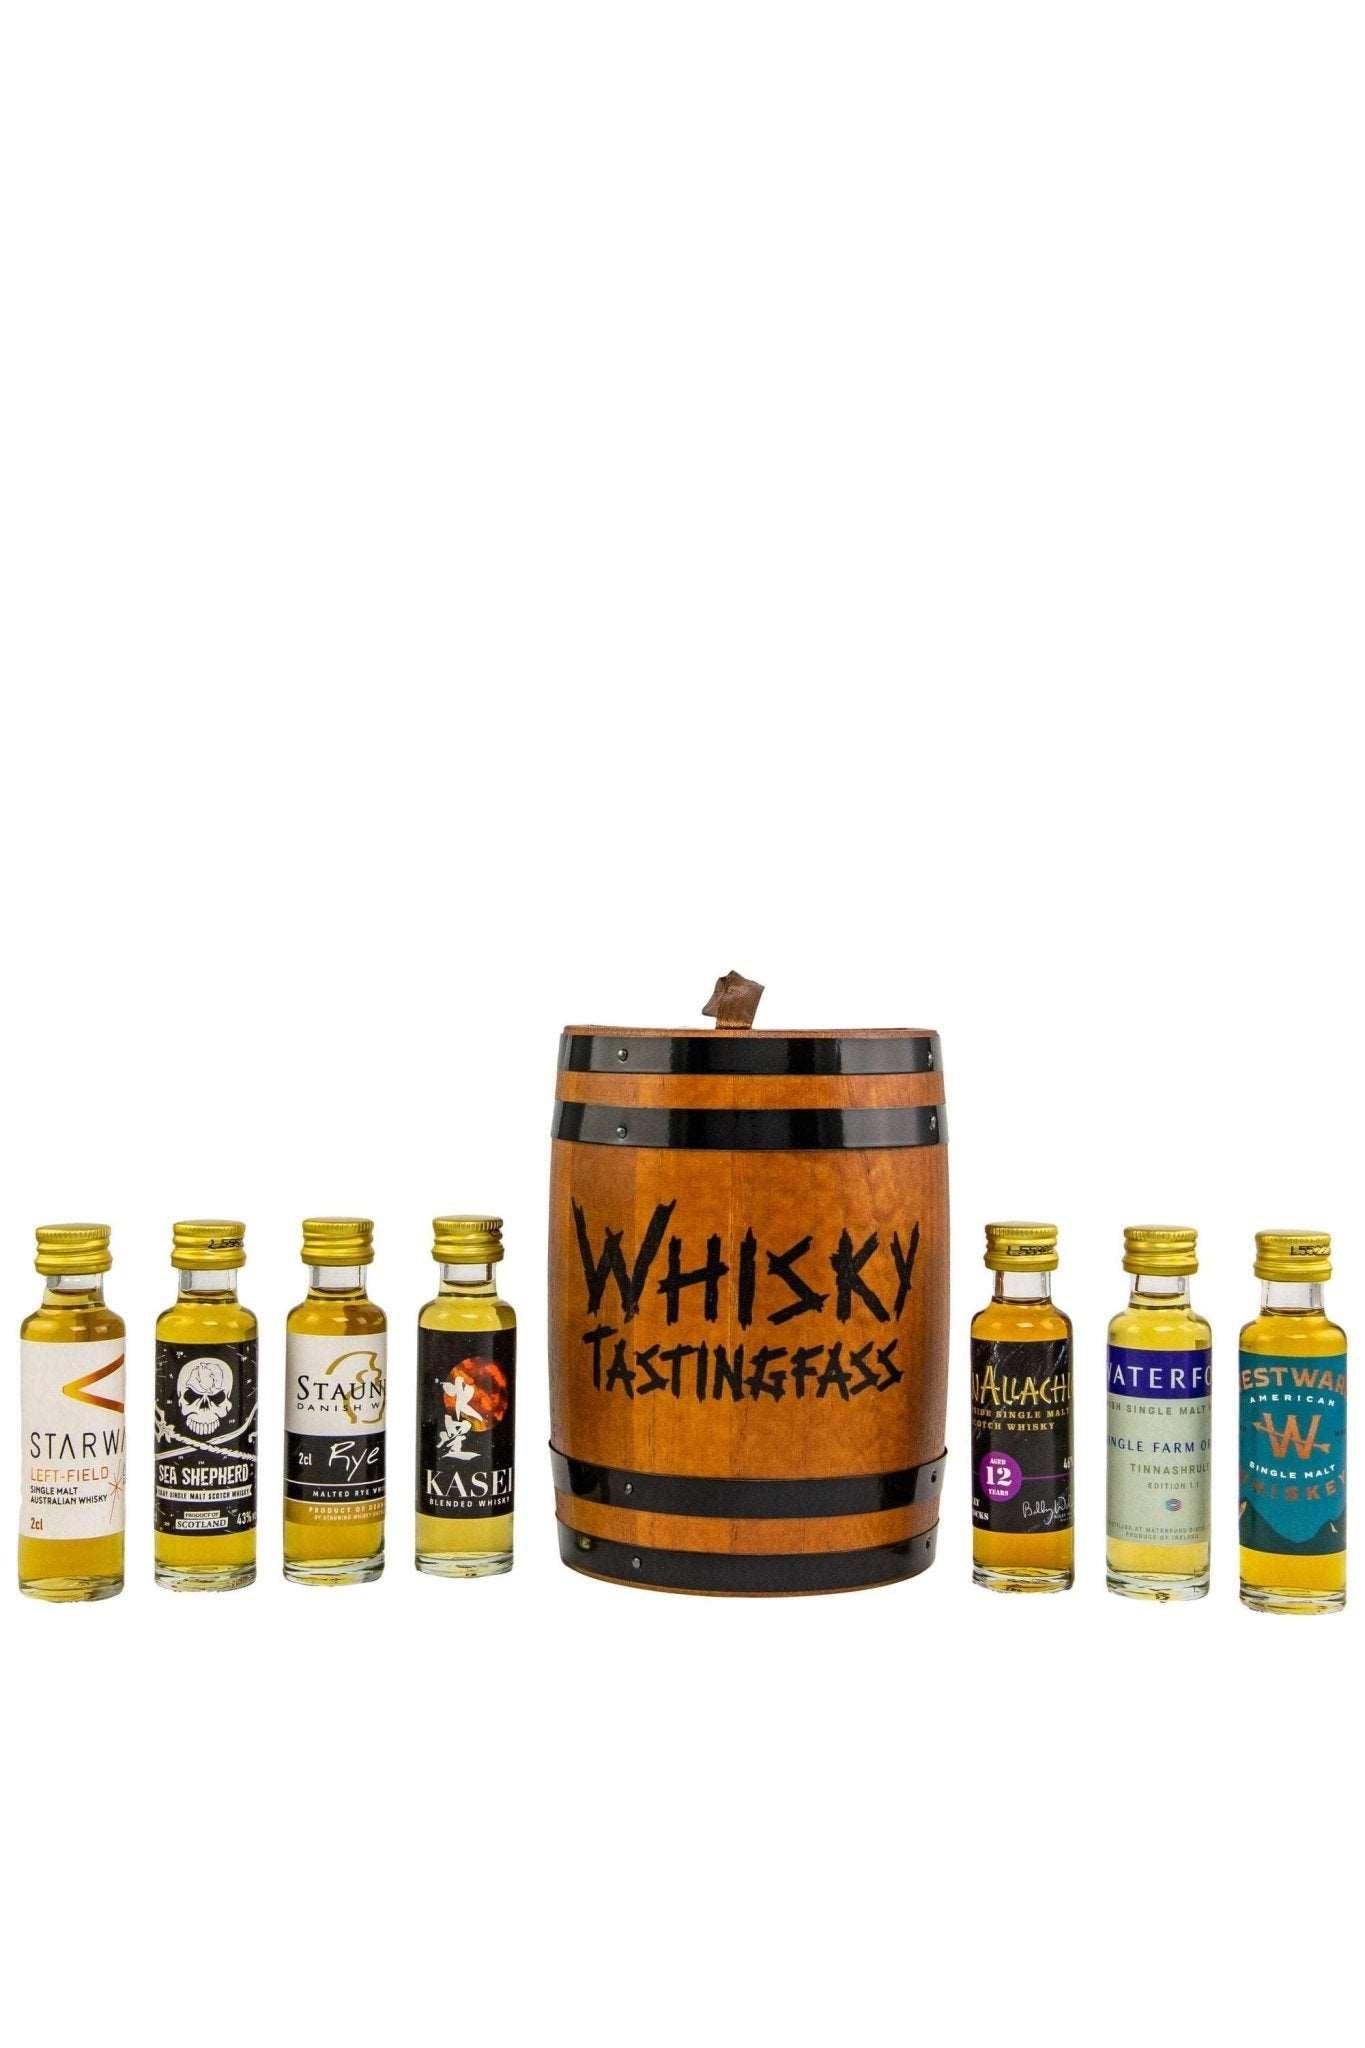 World Whisky Tasting Fass Kirsch Import Taste24 2022 7x20ml - Maltimore